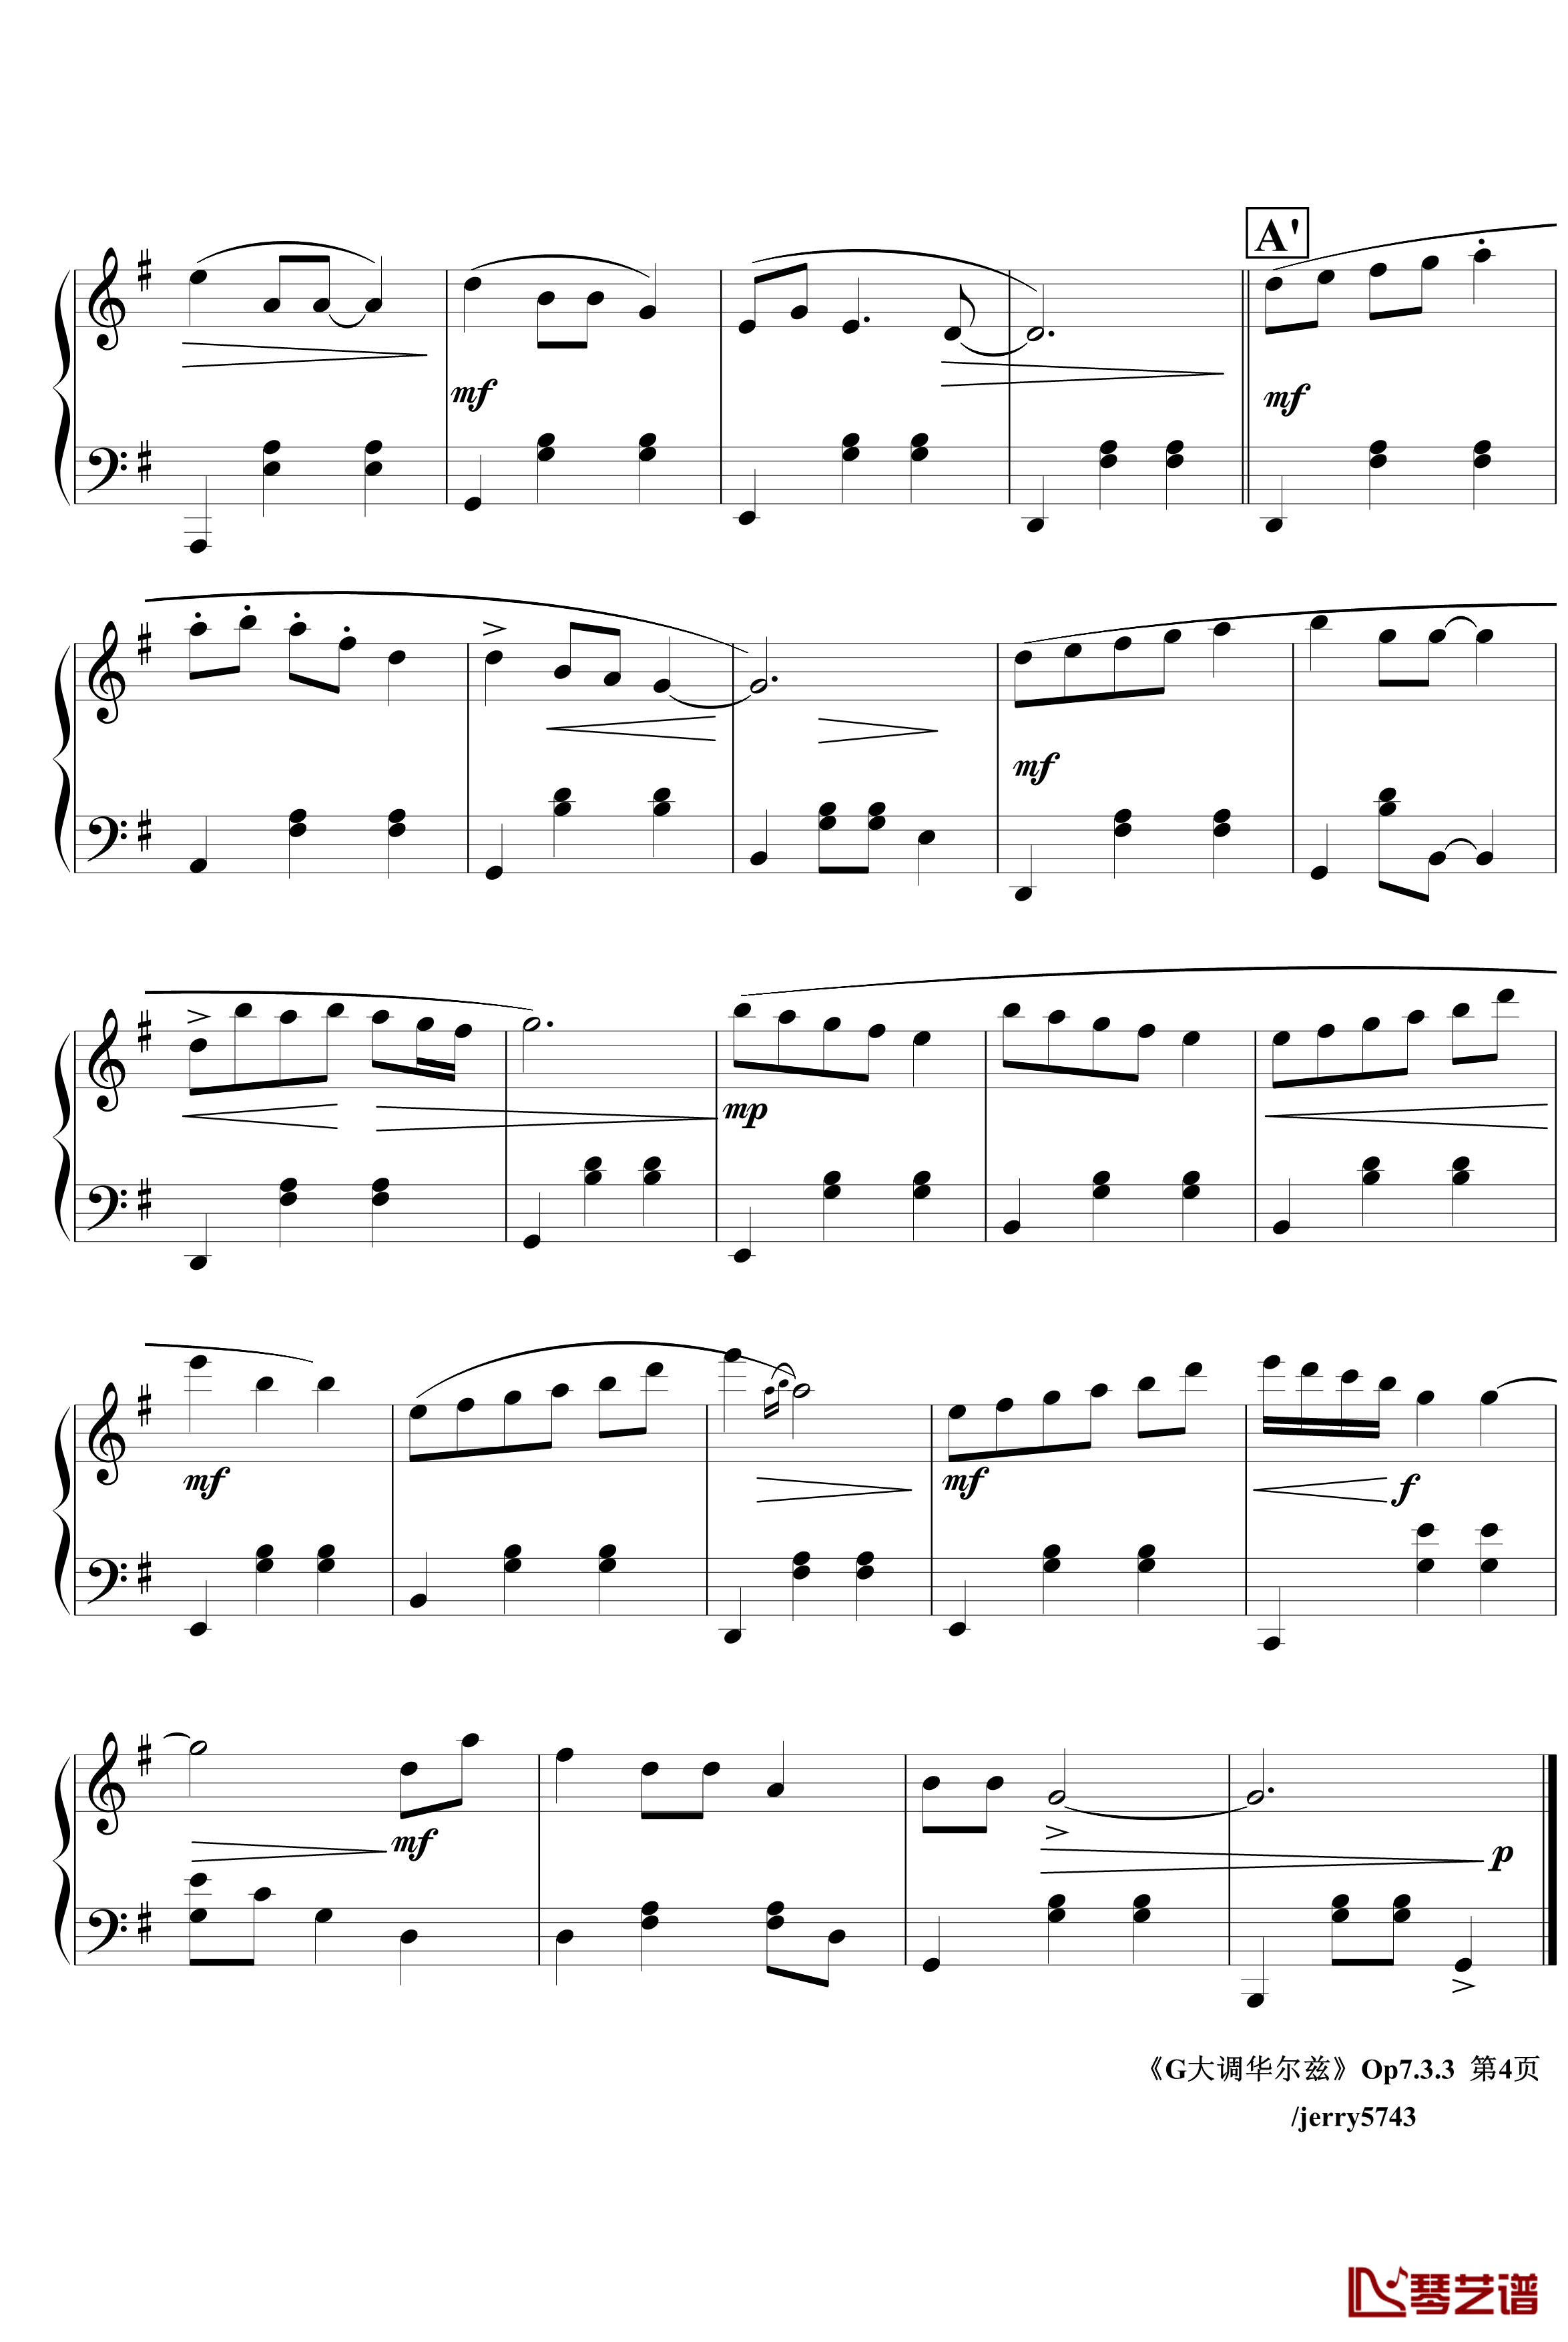 G大调华尔兹Op7.3.3钢琴谱-jerry57434